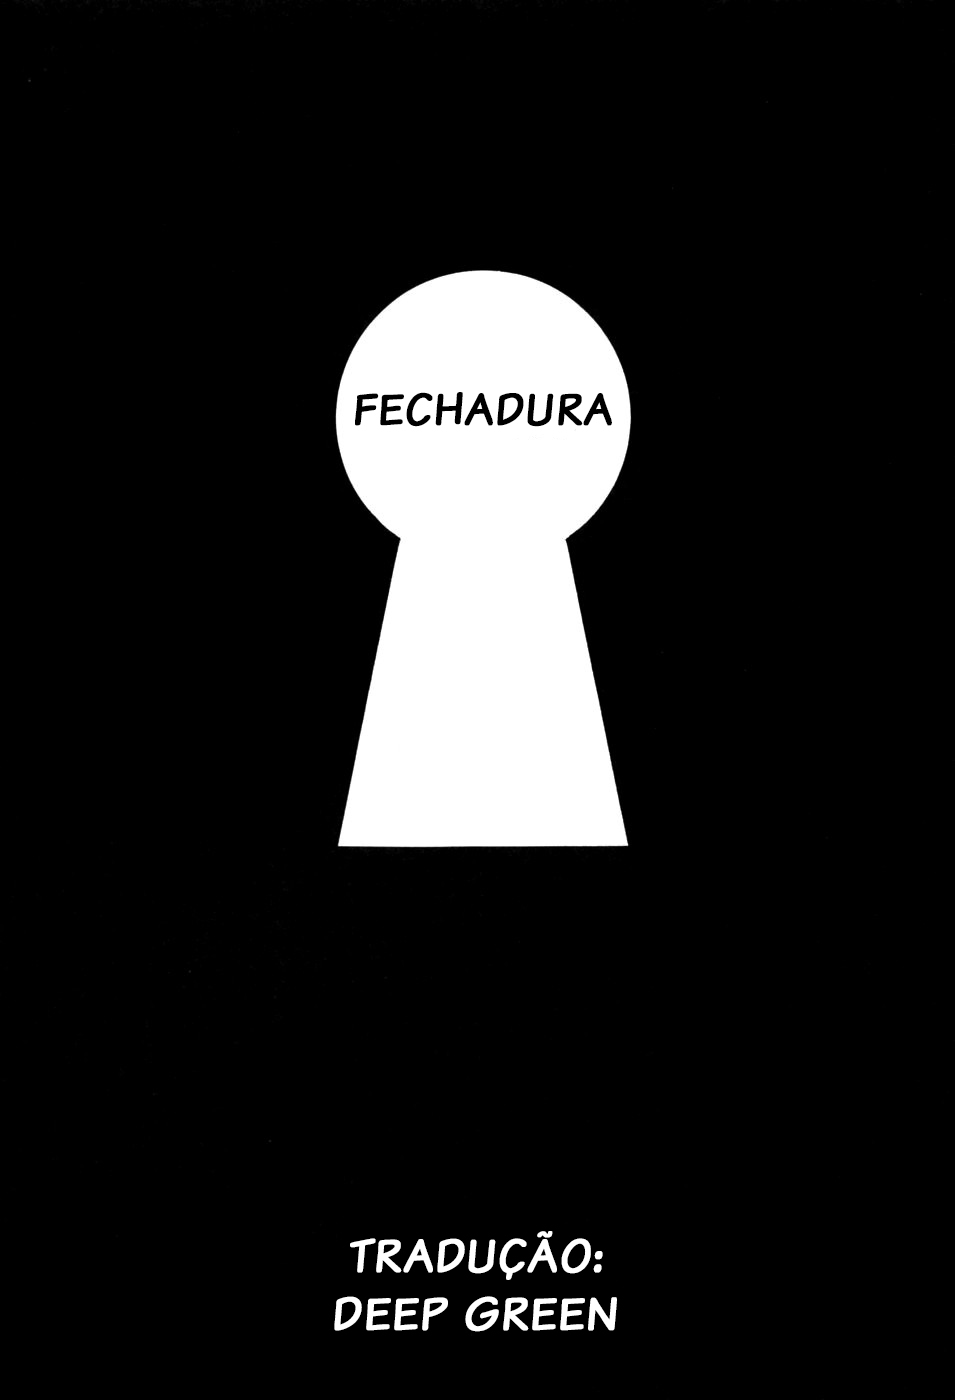 Fechadura